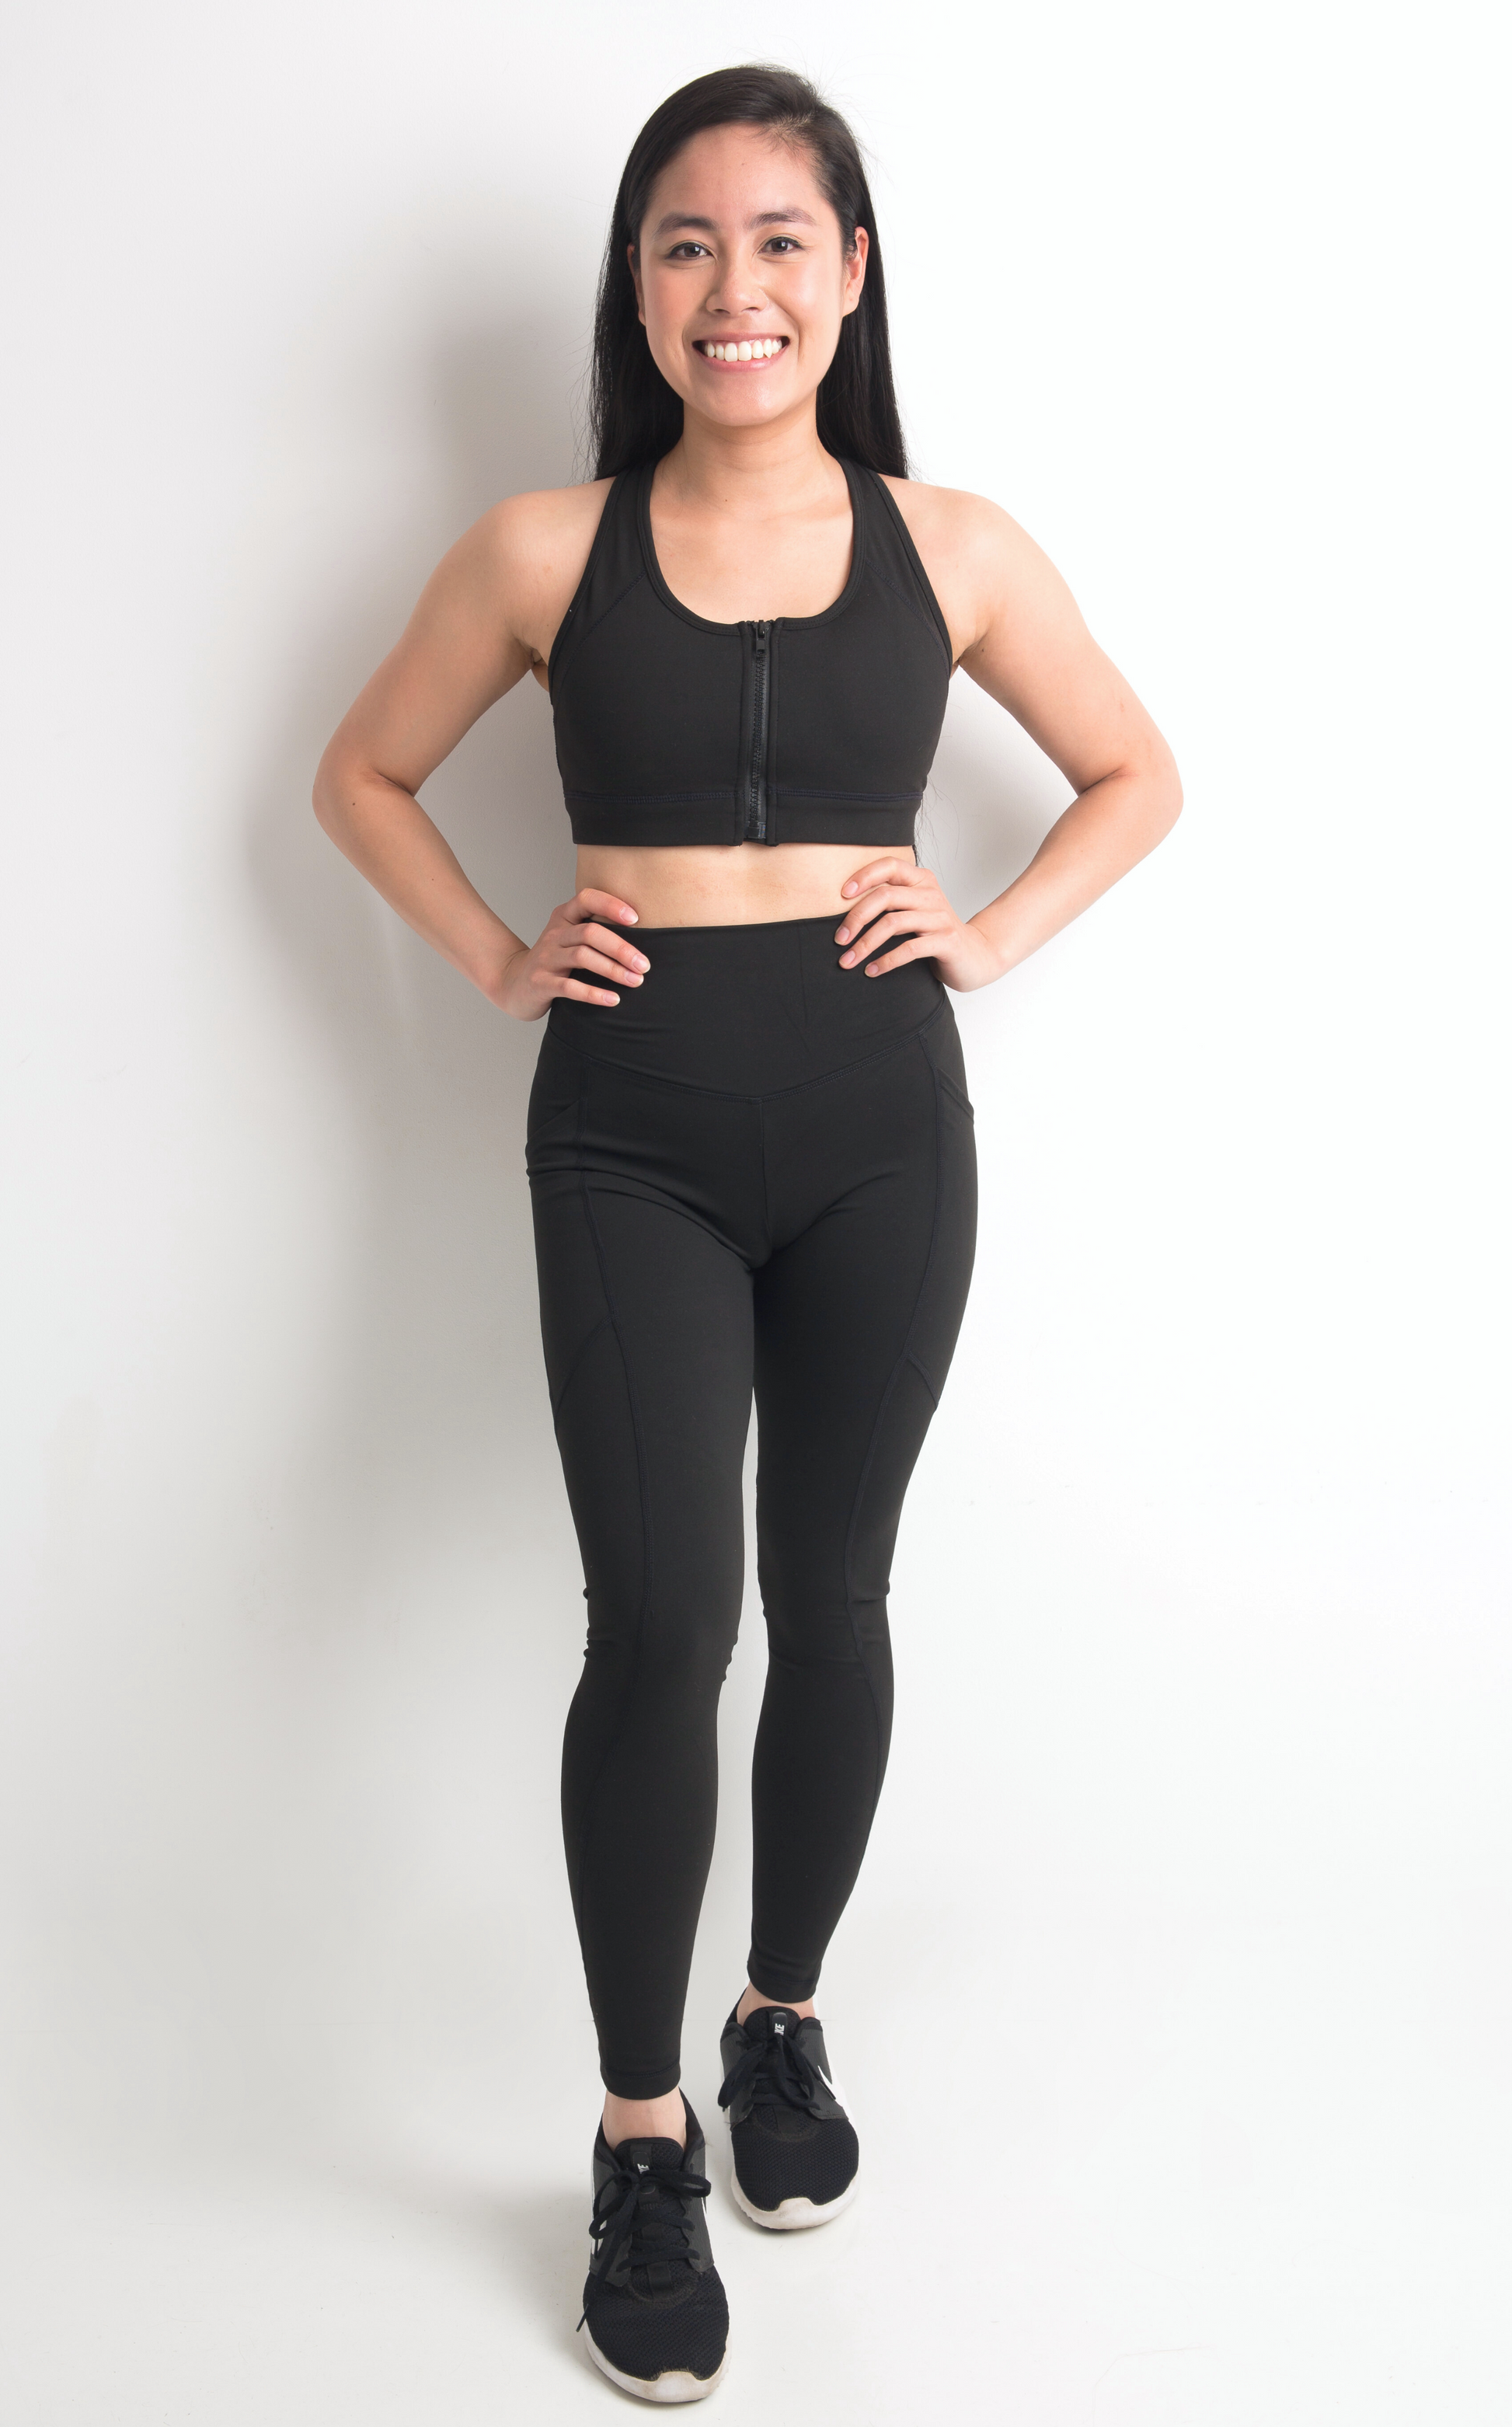 Booty Pocket Scrunch Leggings (Gray) – Fitness Fashioness